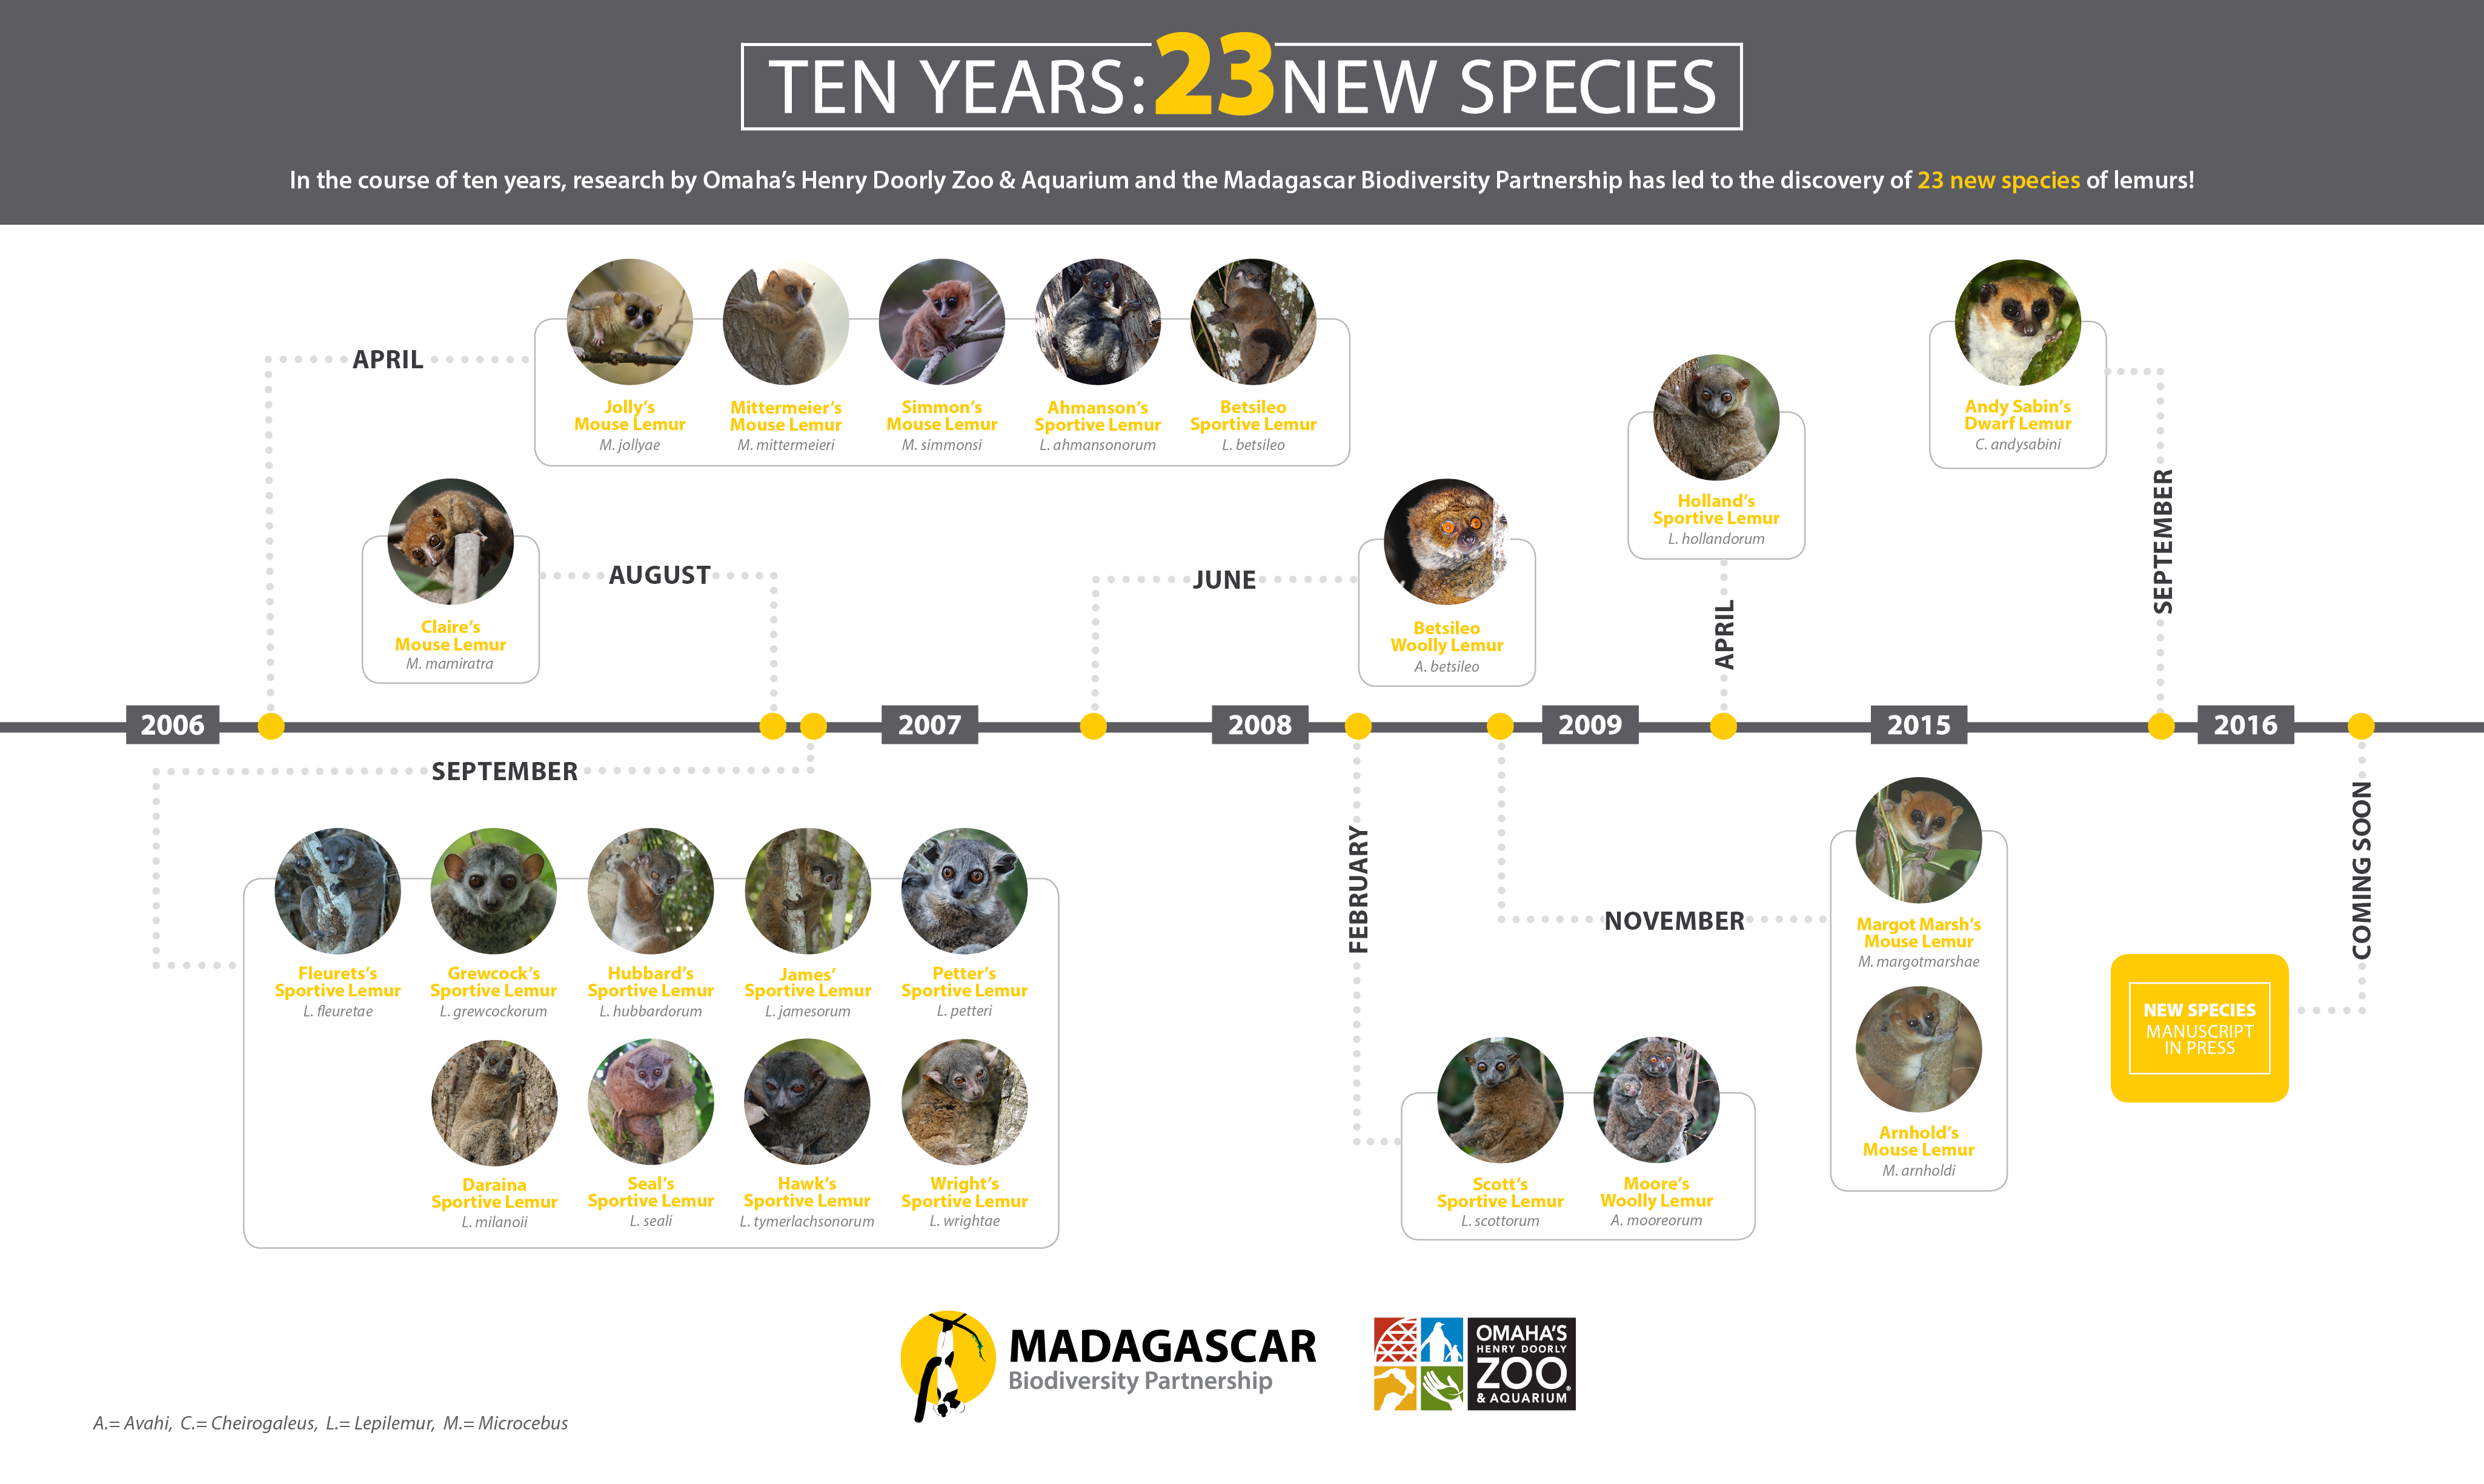 mbp-species-timeline_11-14-16_sized